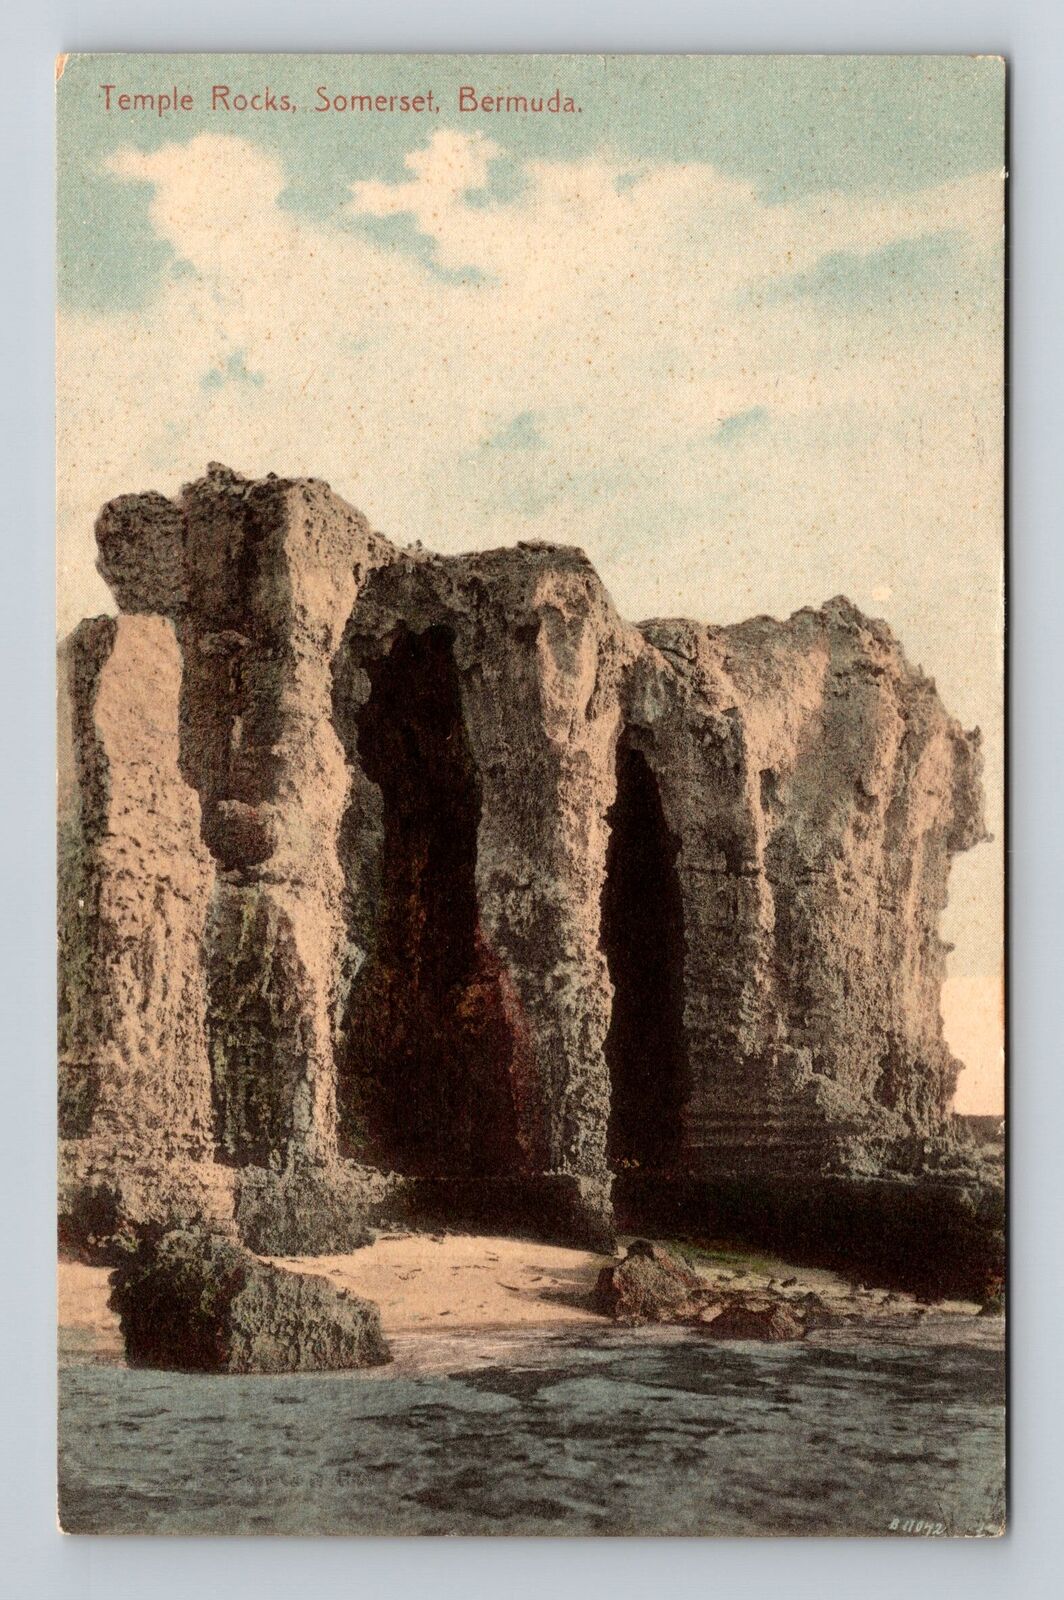 Somerset-Bermuda,Temple Rock, Vintage Postcard